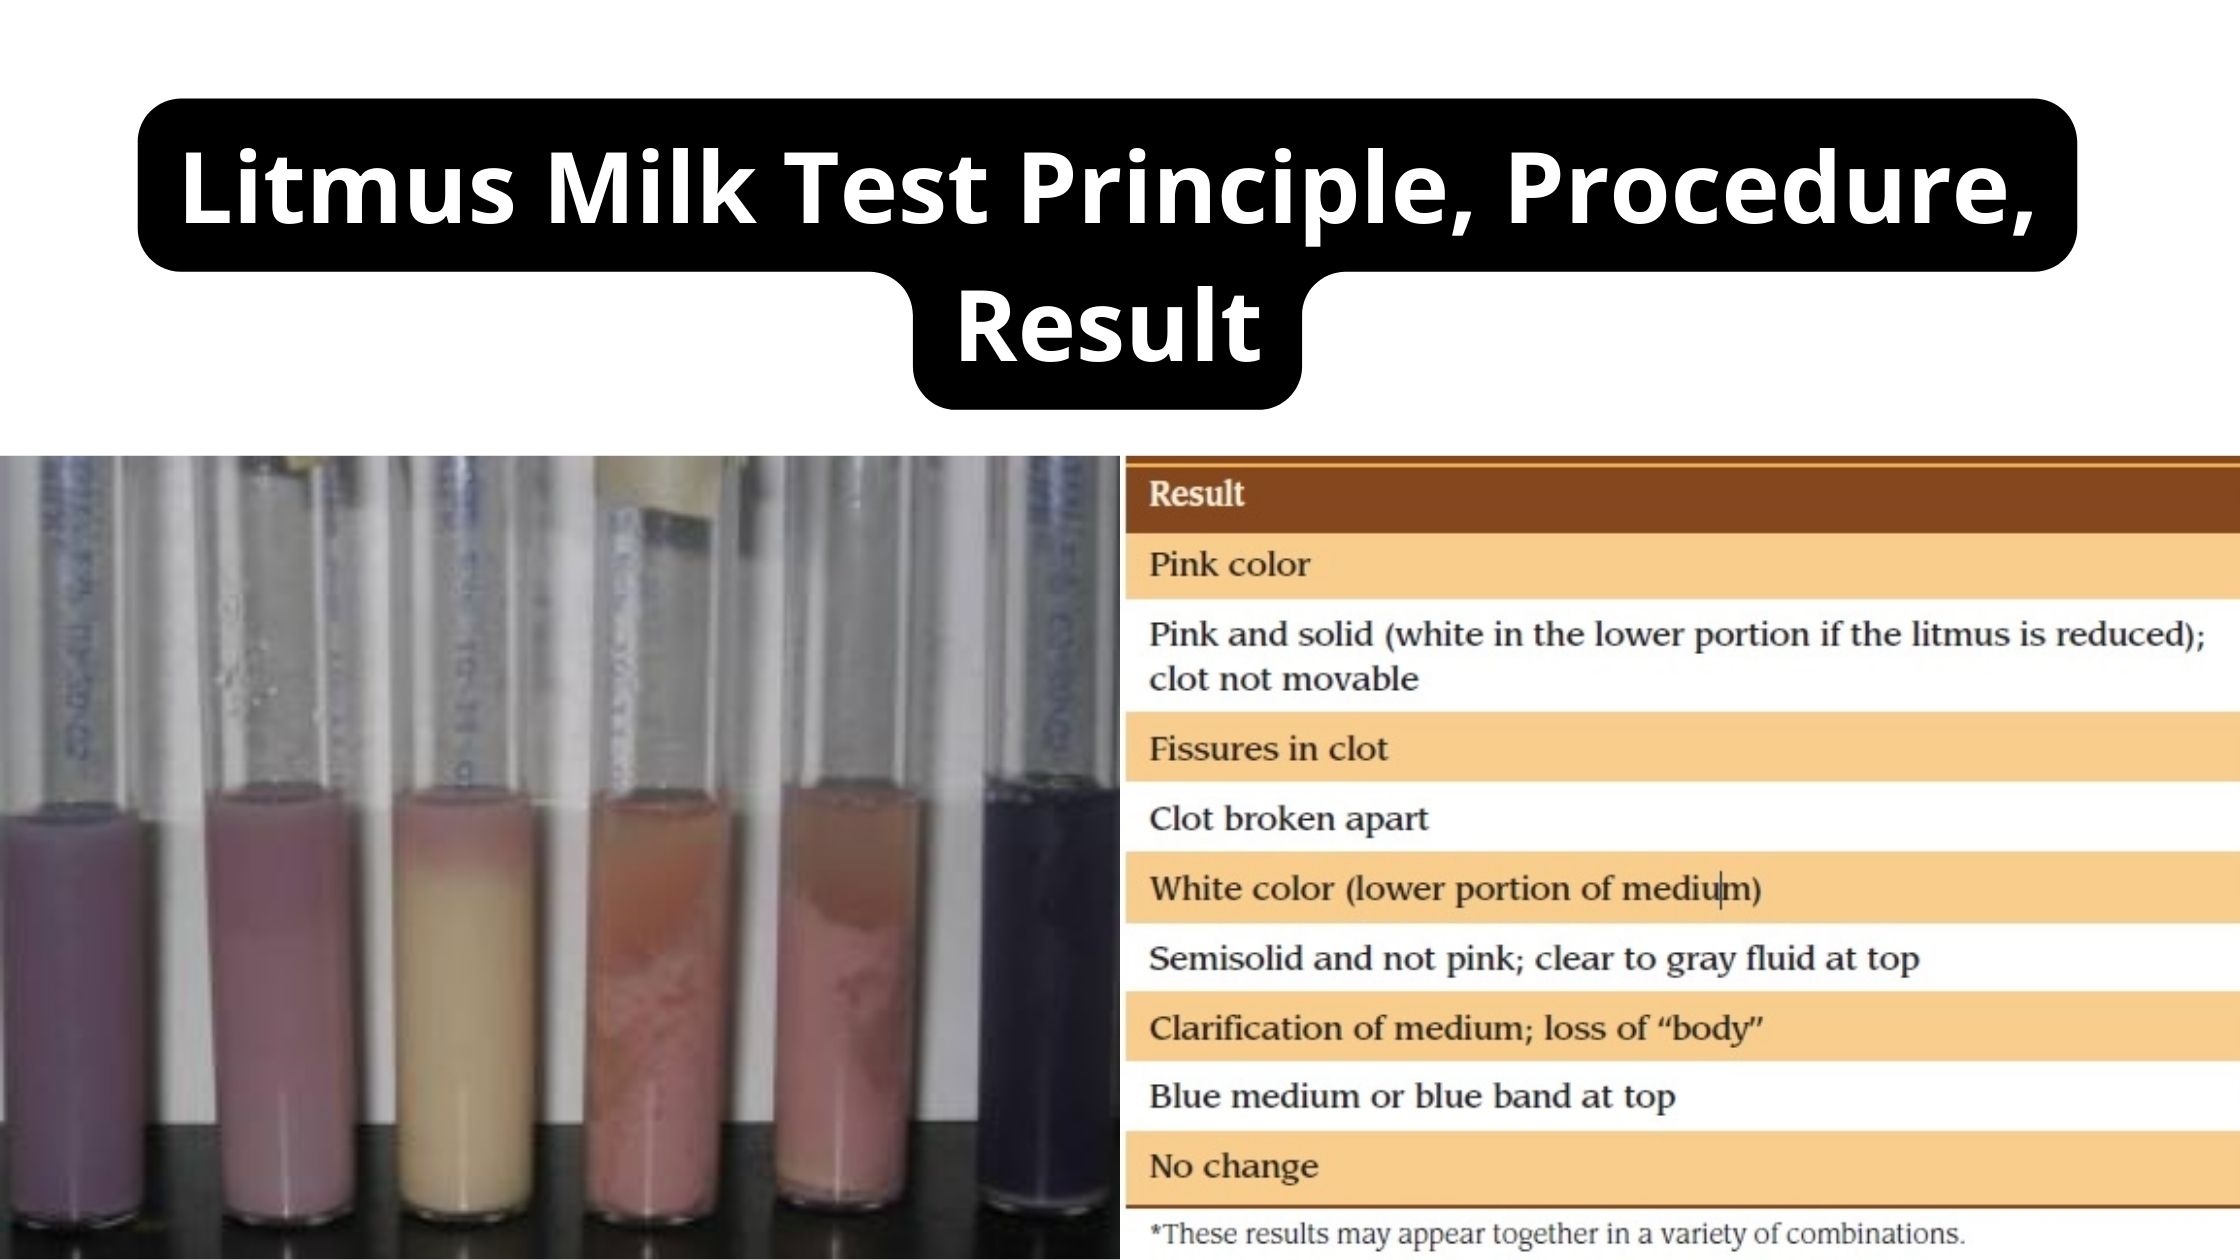 Litmus Milk Test Principle, Procedure, Result